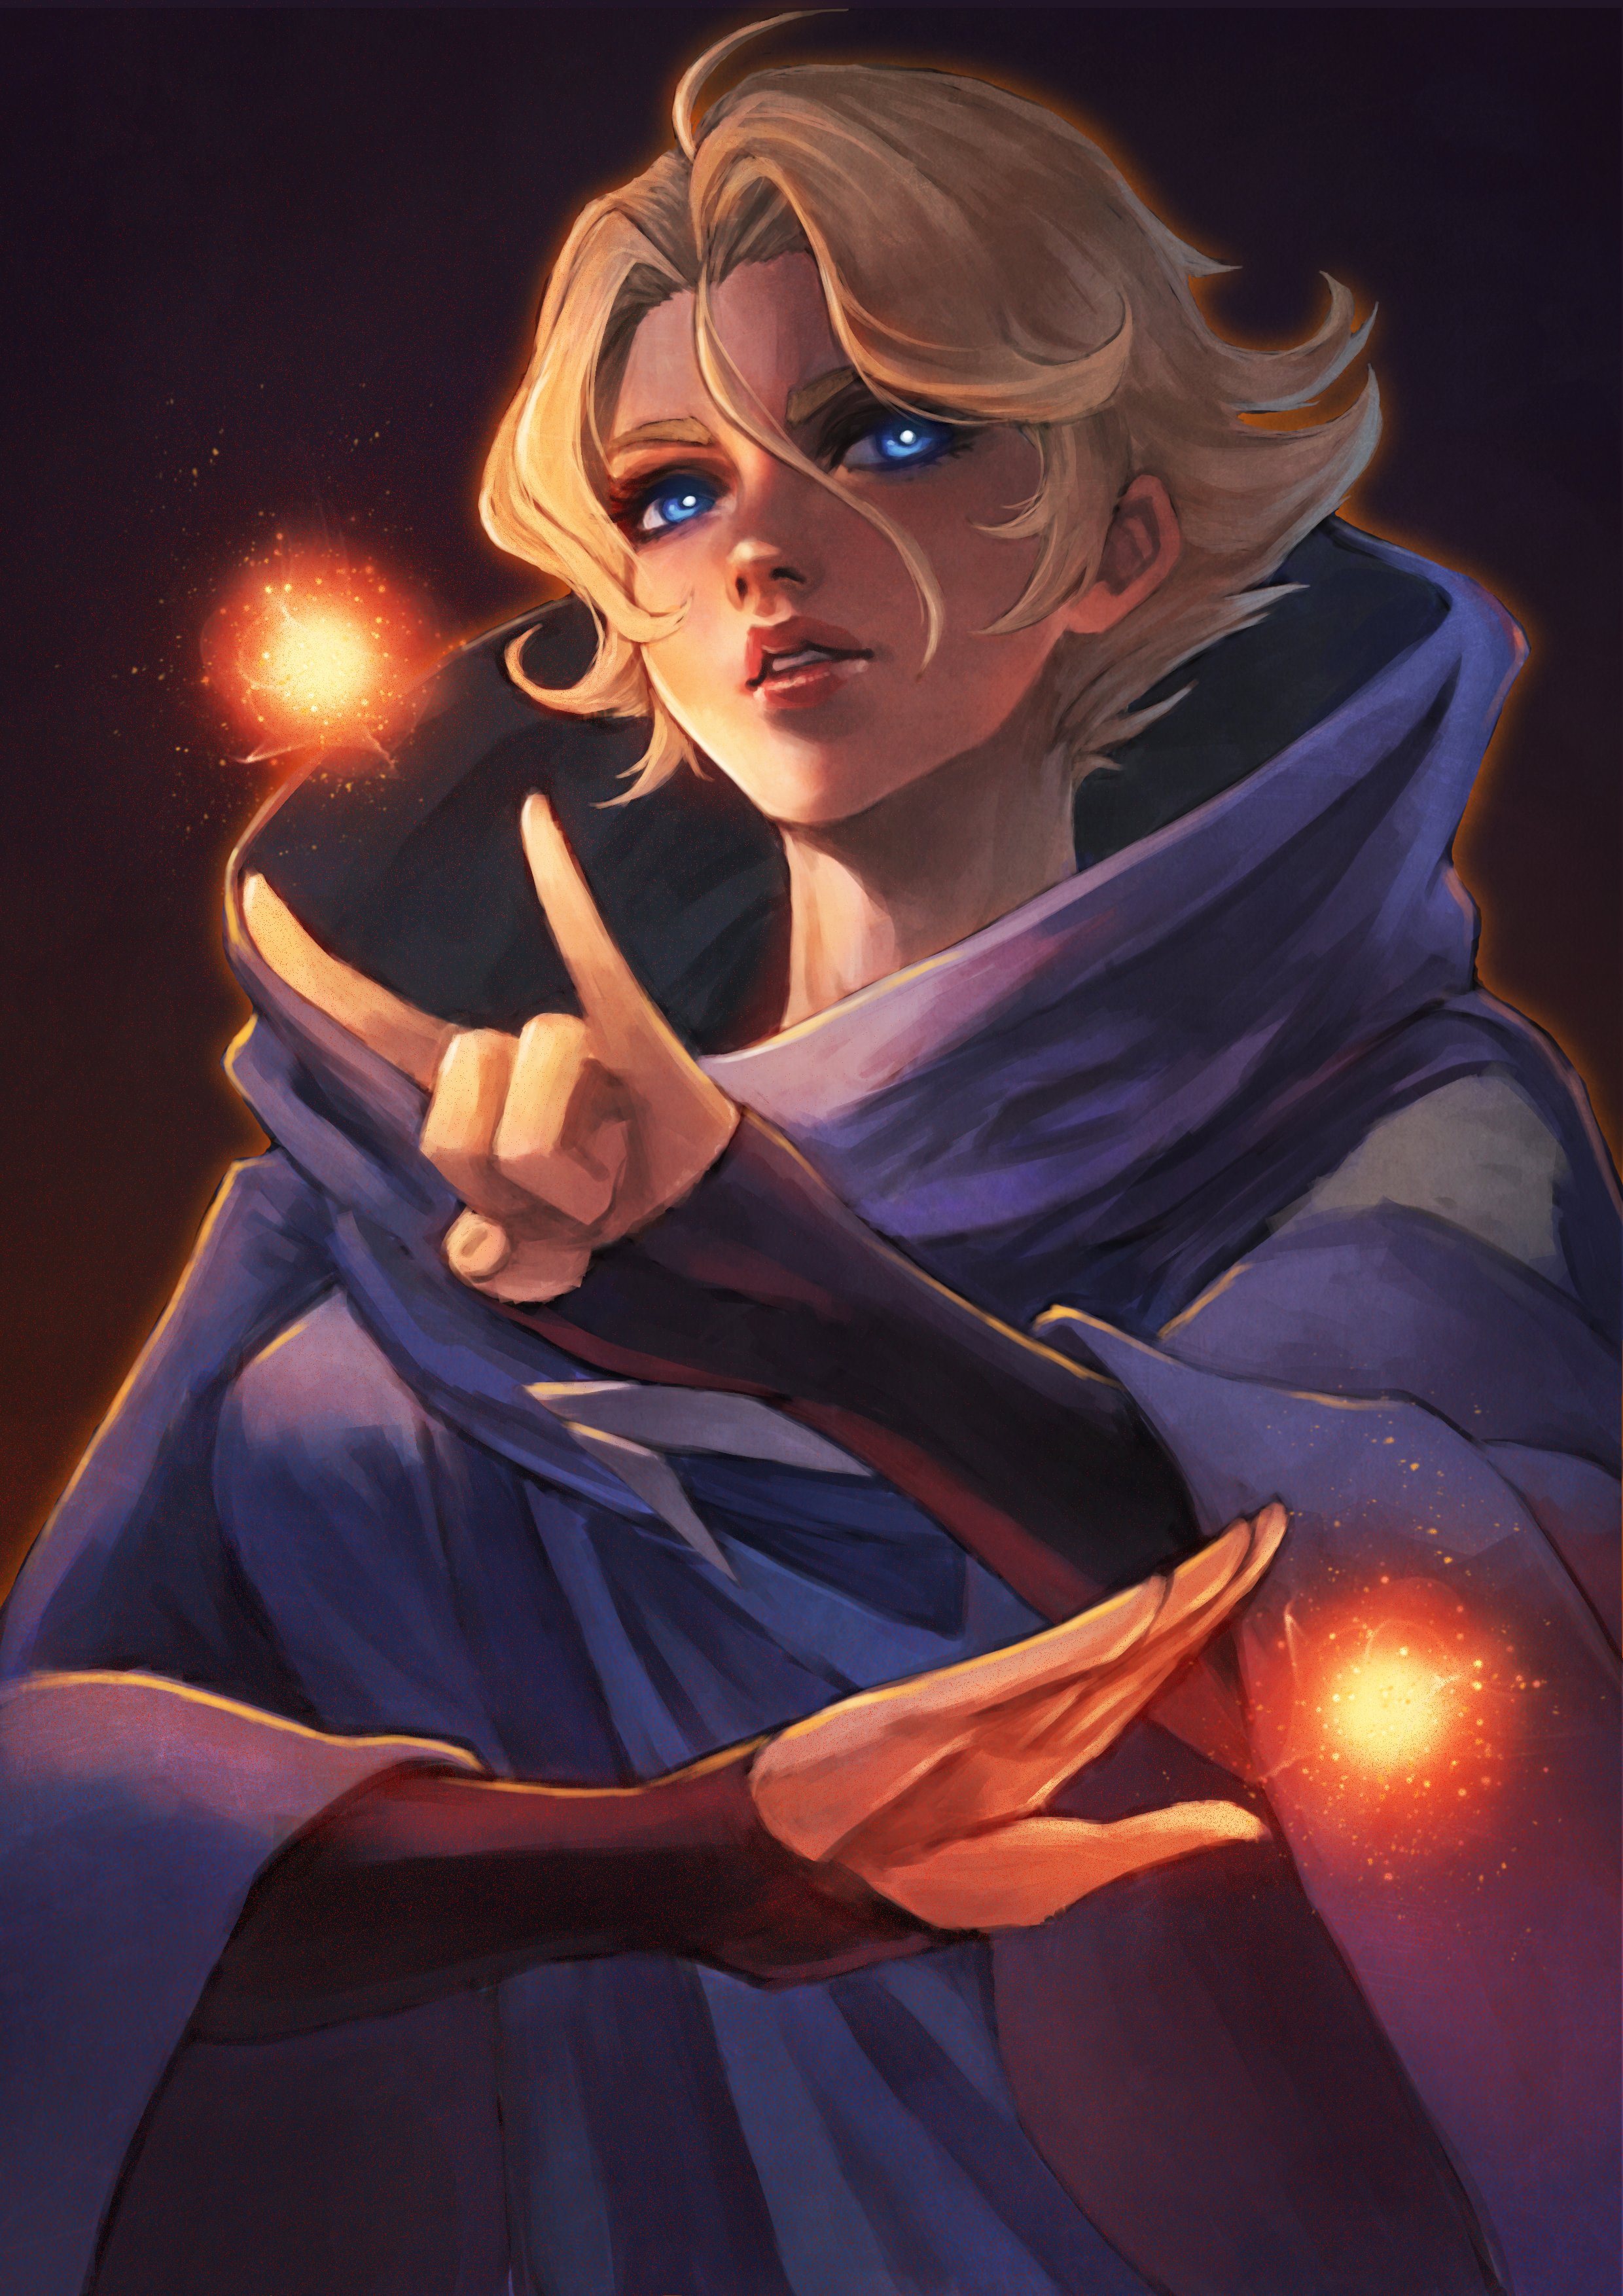 General 2480x3508 Sypha Belnades Castlevania (anime) blonde blue eyes fireballs magician cape short hair MonoriRogue